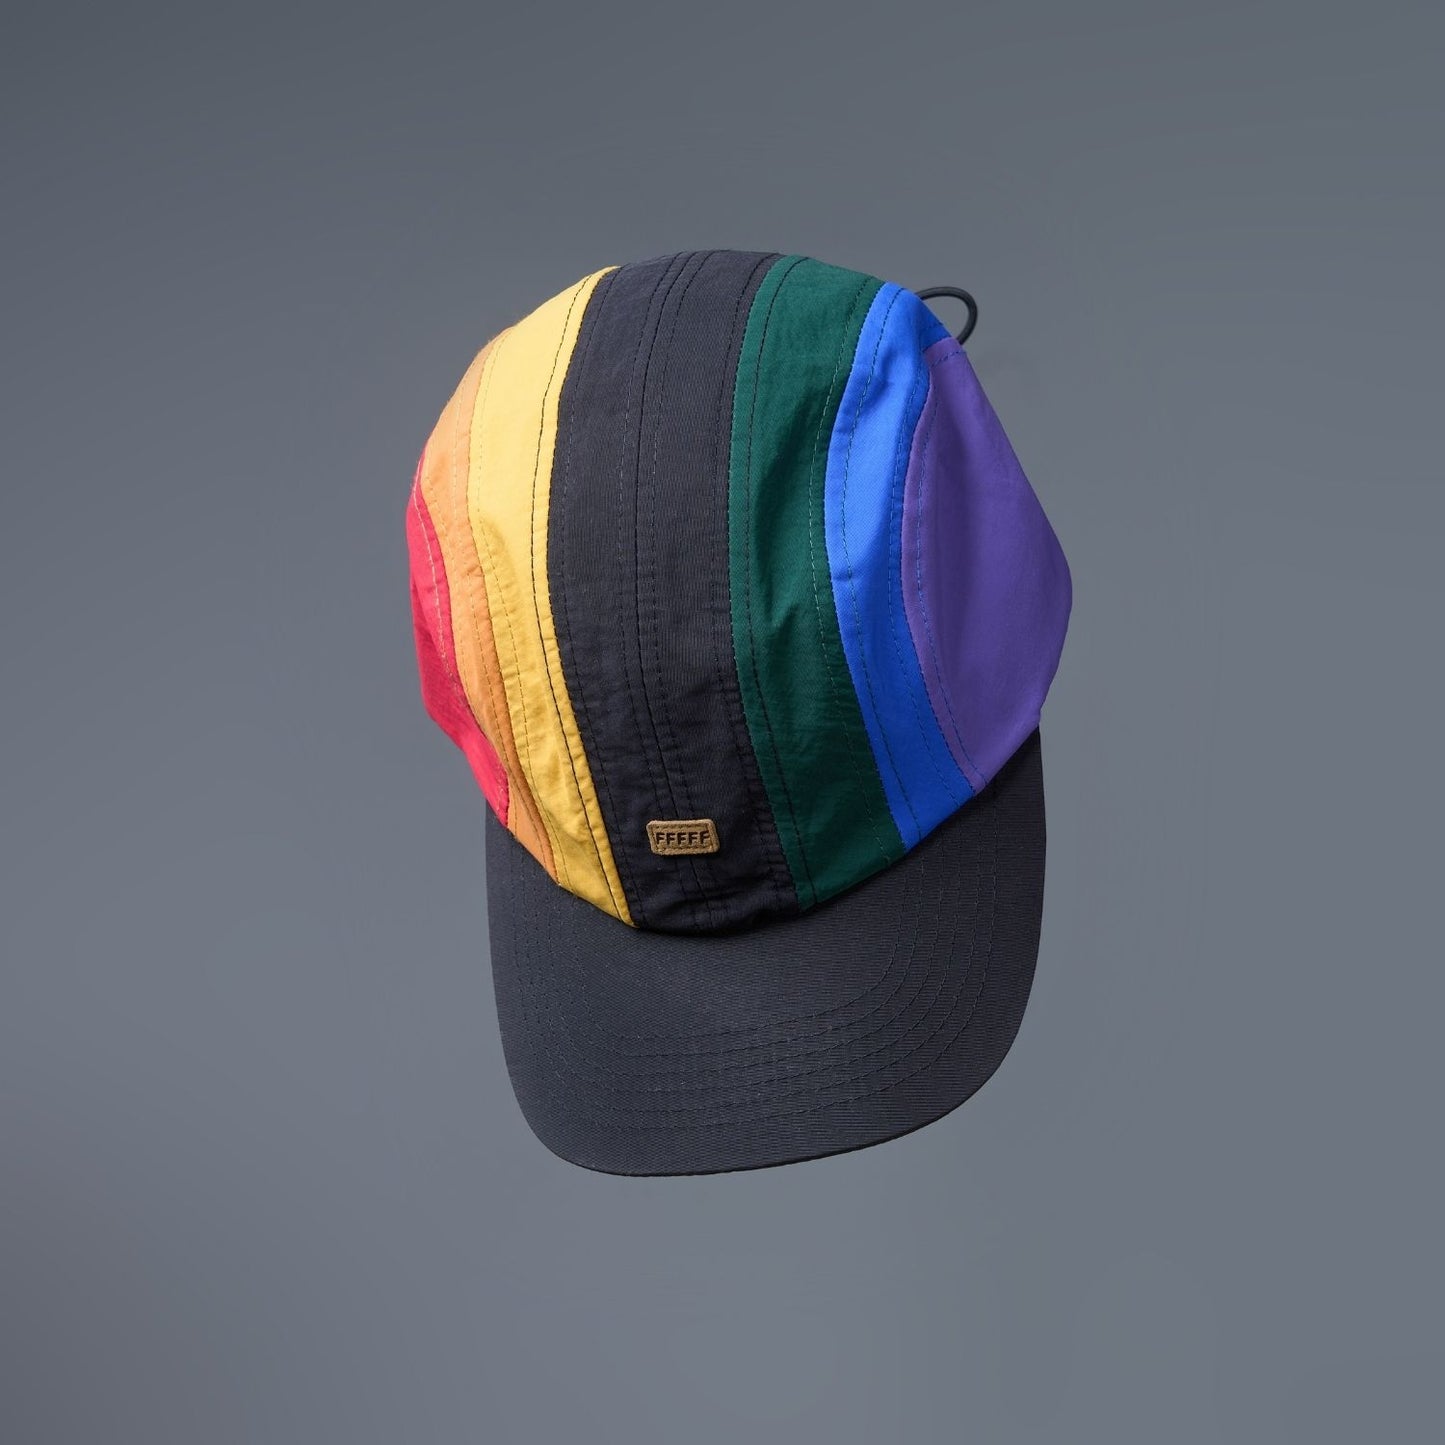 Multi colored, wide brim cap for men with adjustable strap, design details.